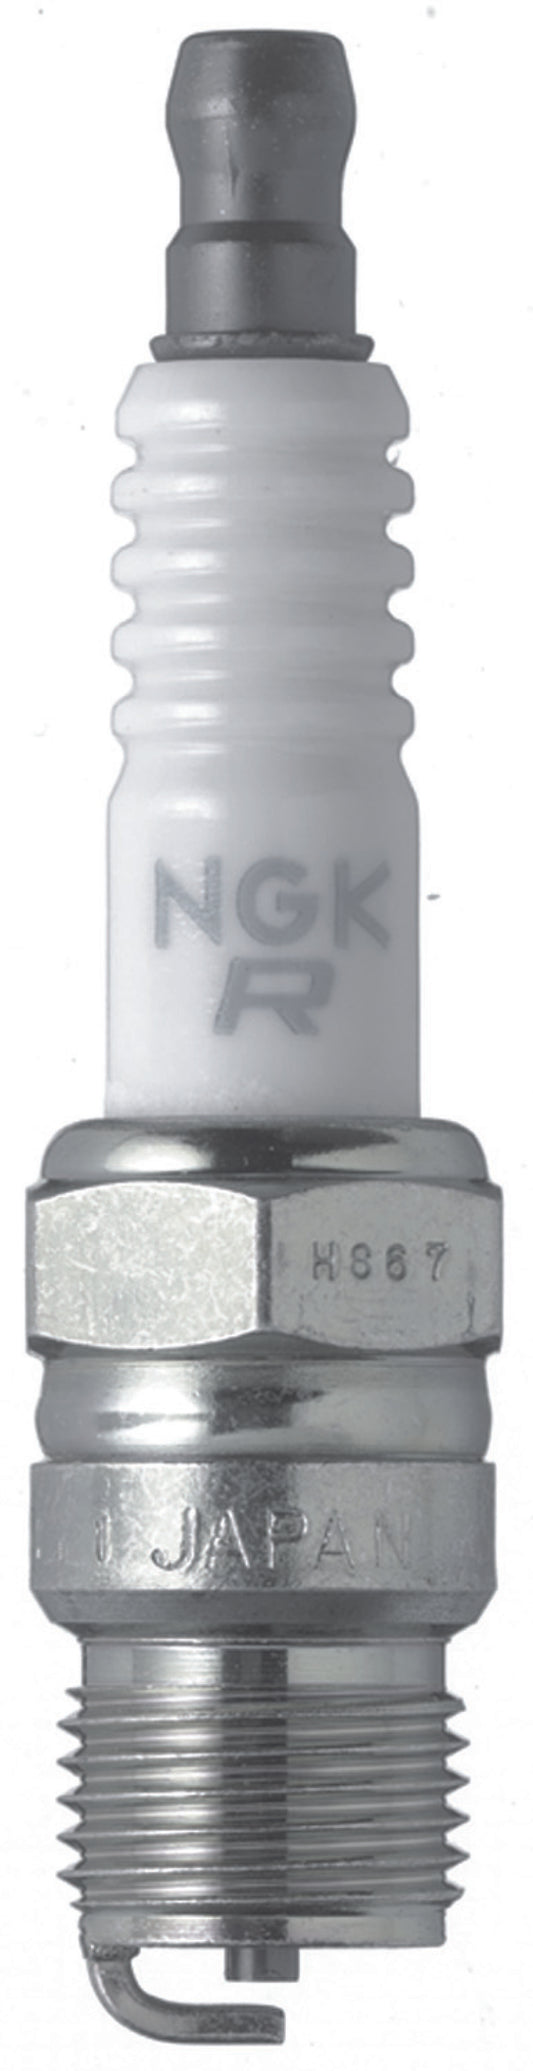 NGK V-Power Spark Plug Box of 4 (YR5)